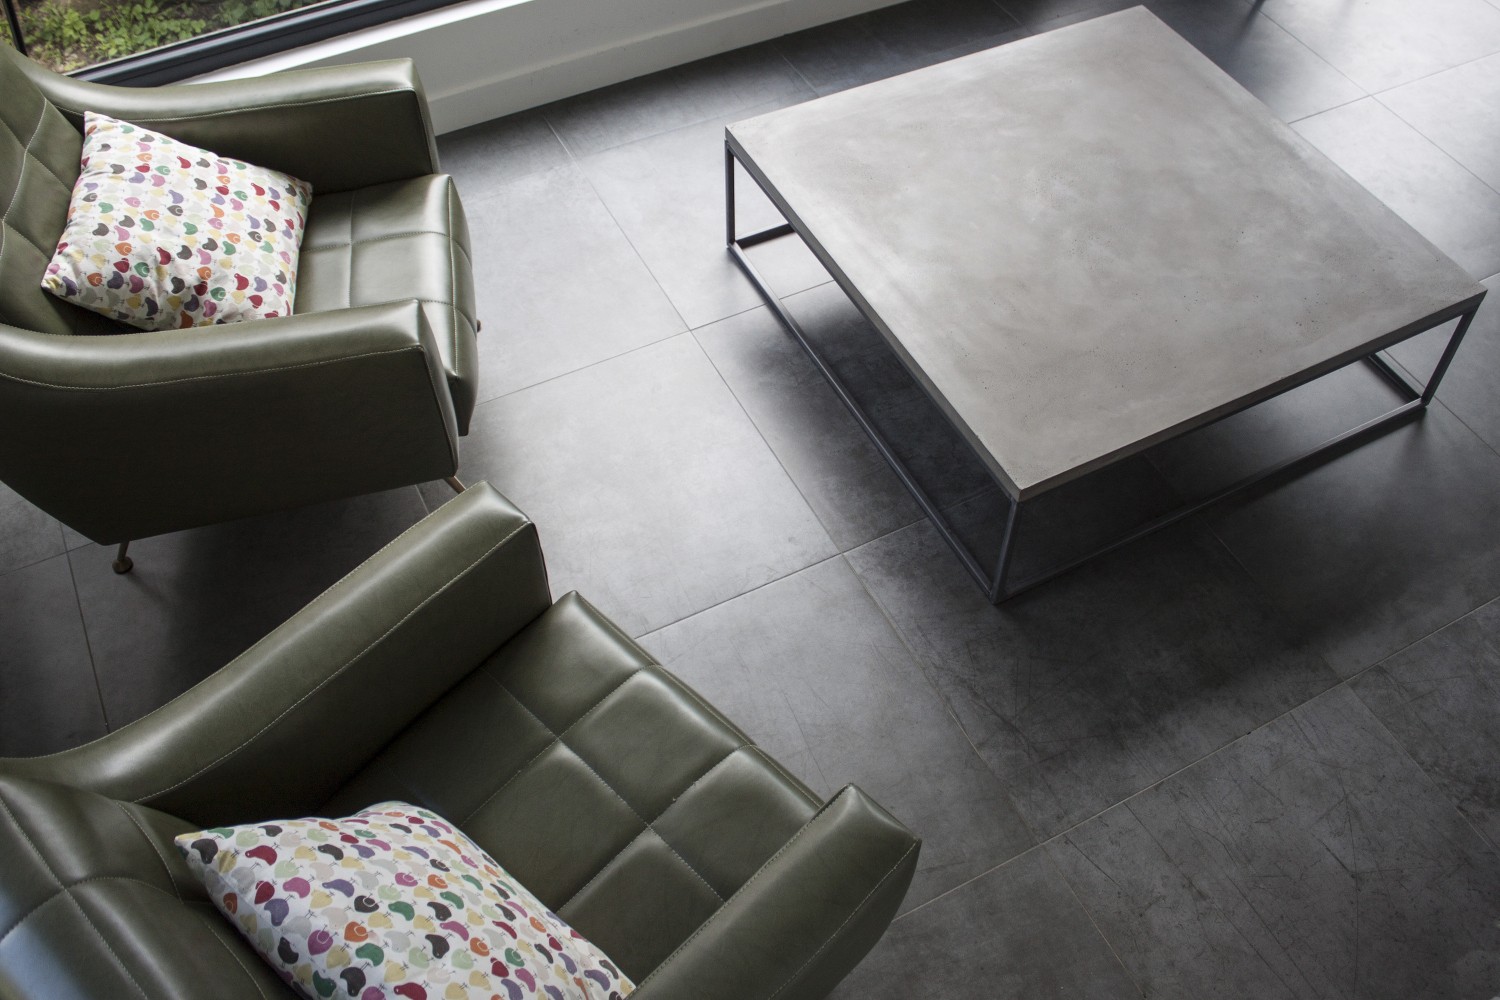 Möbel aus Beton - Perspective Coffee Table XL